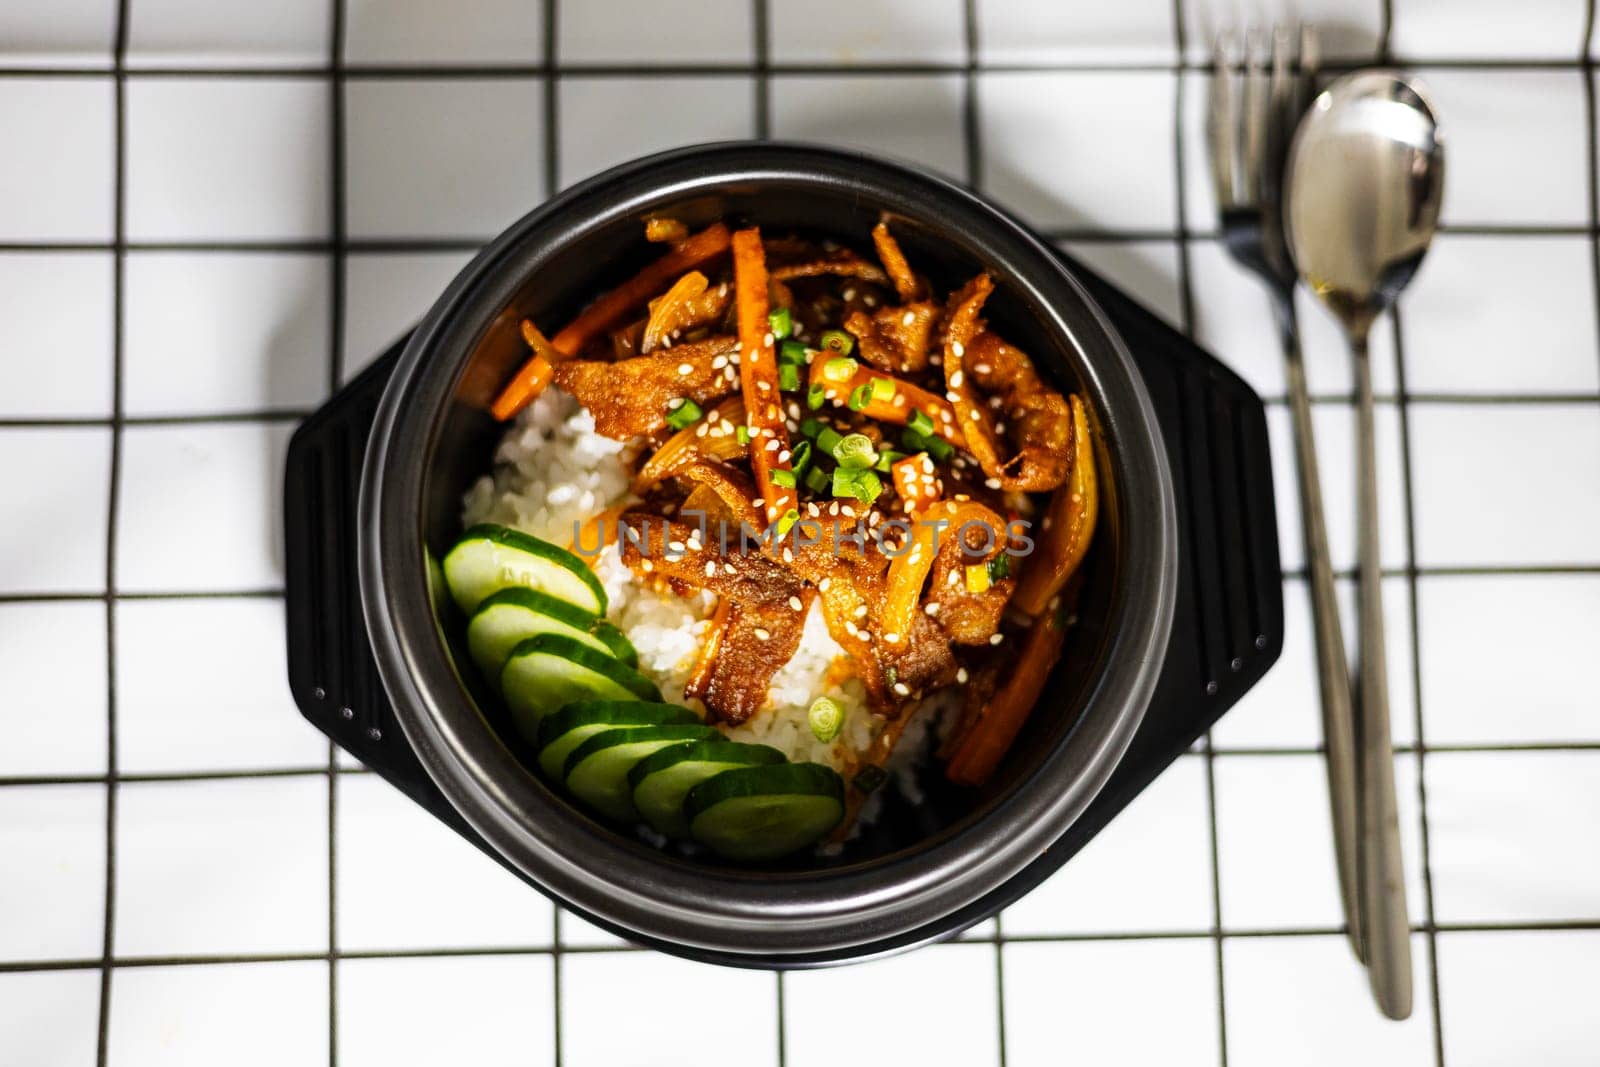 Rice And Stir Fried Pork With Korean Sauce. stir-fried pork with kimchi on topped rice - Korean food style.